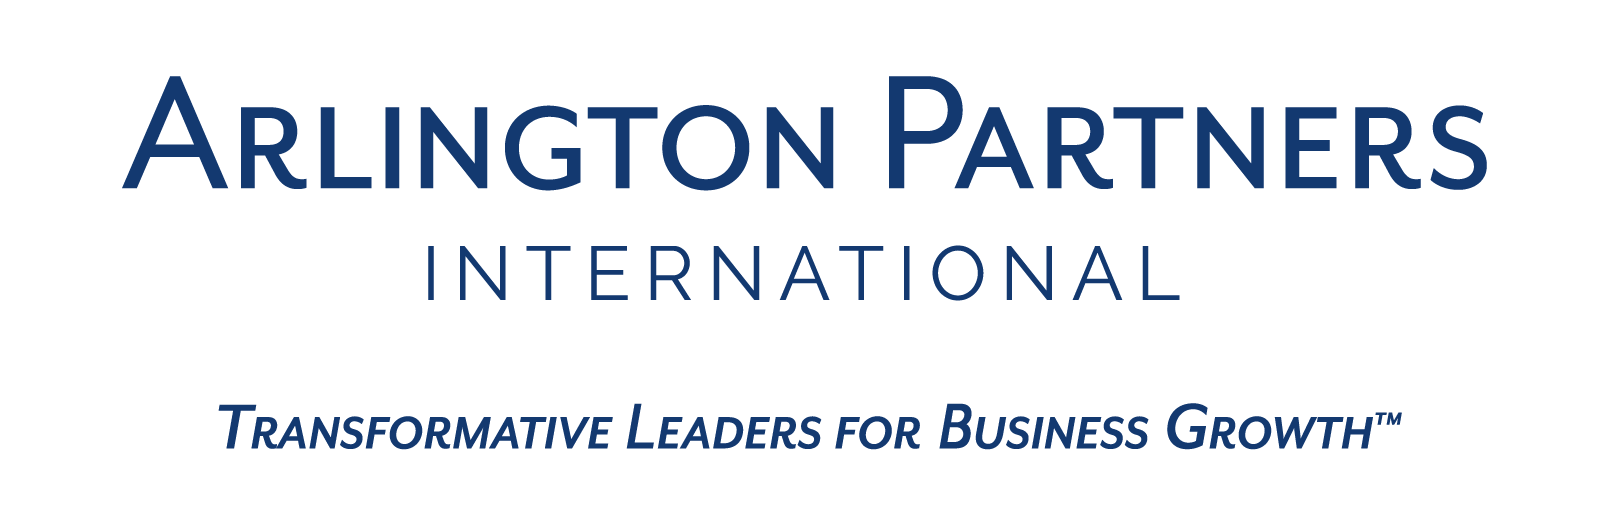 Arlington Partners International